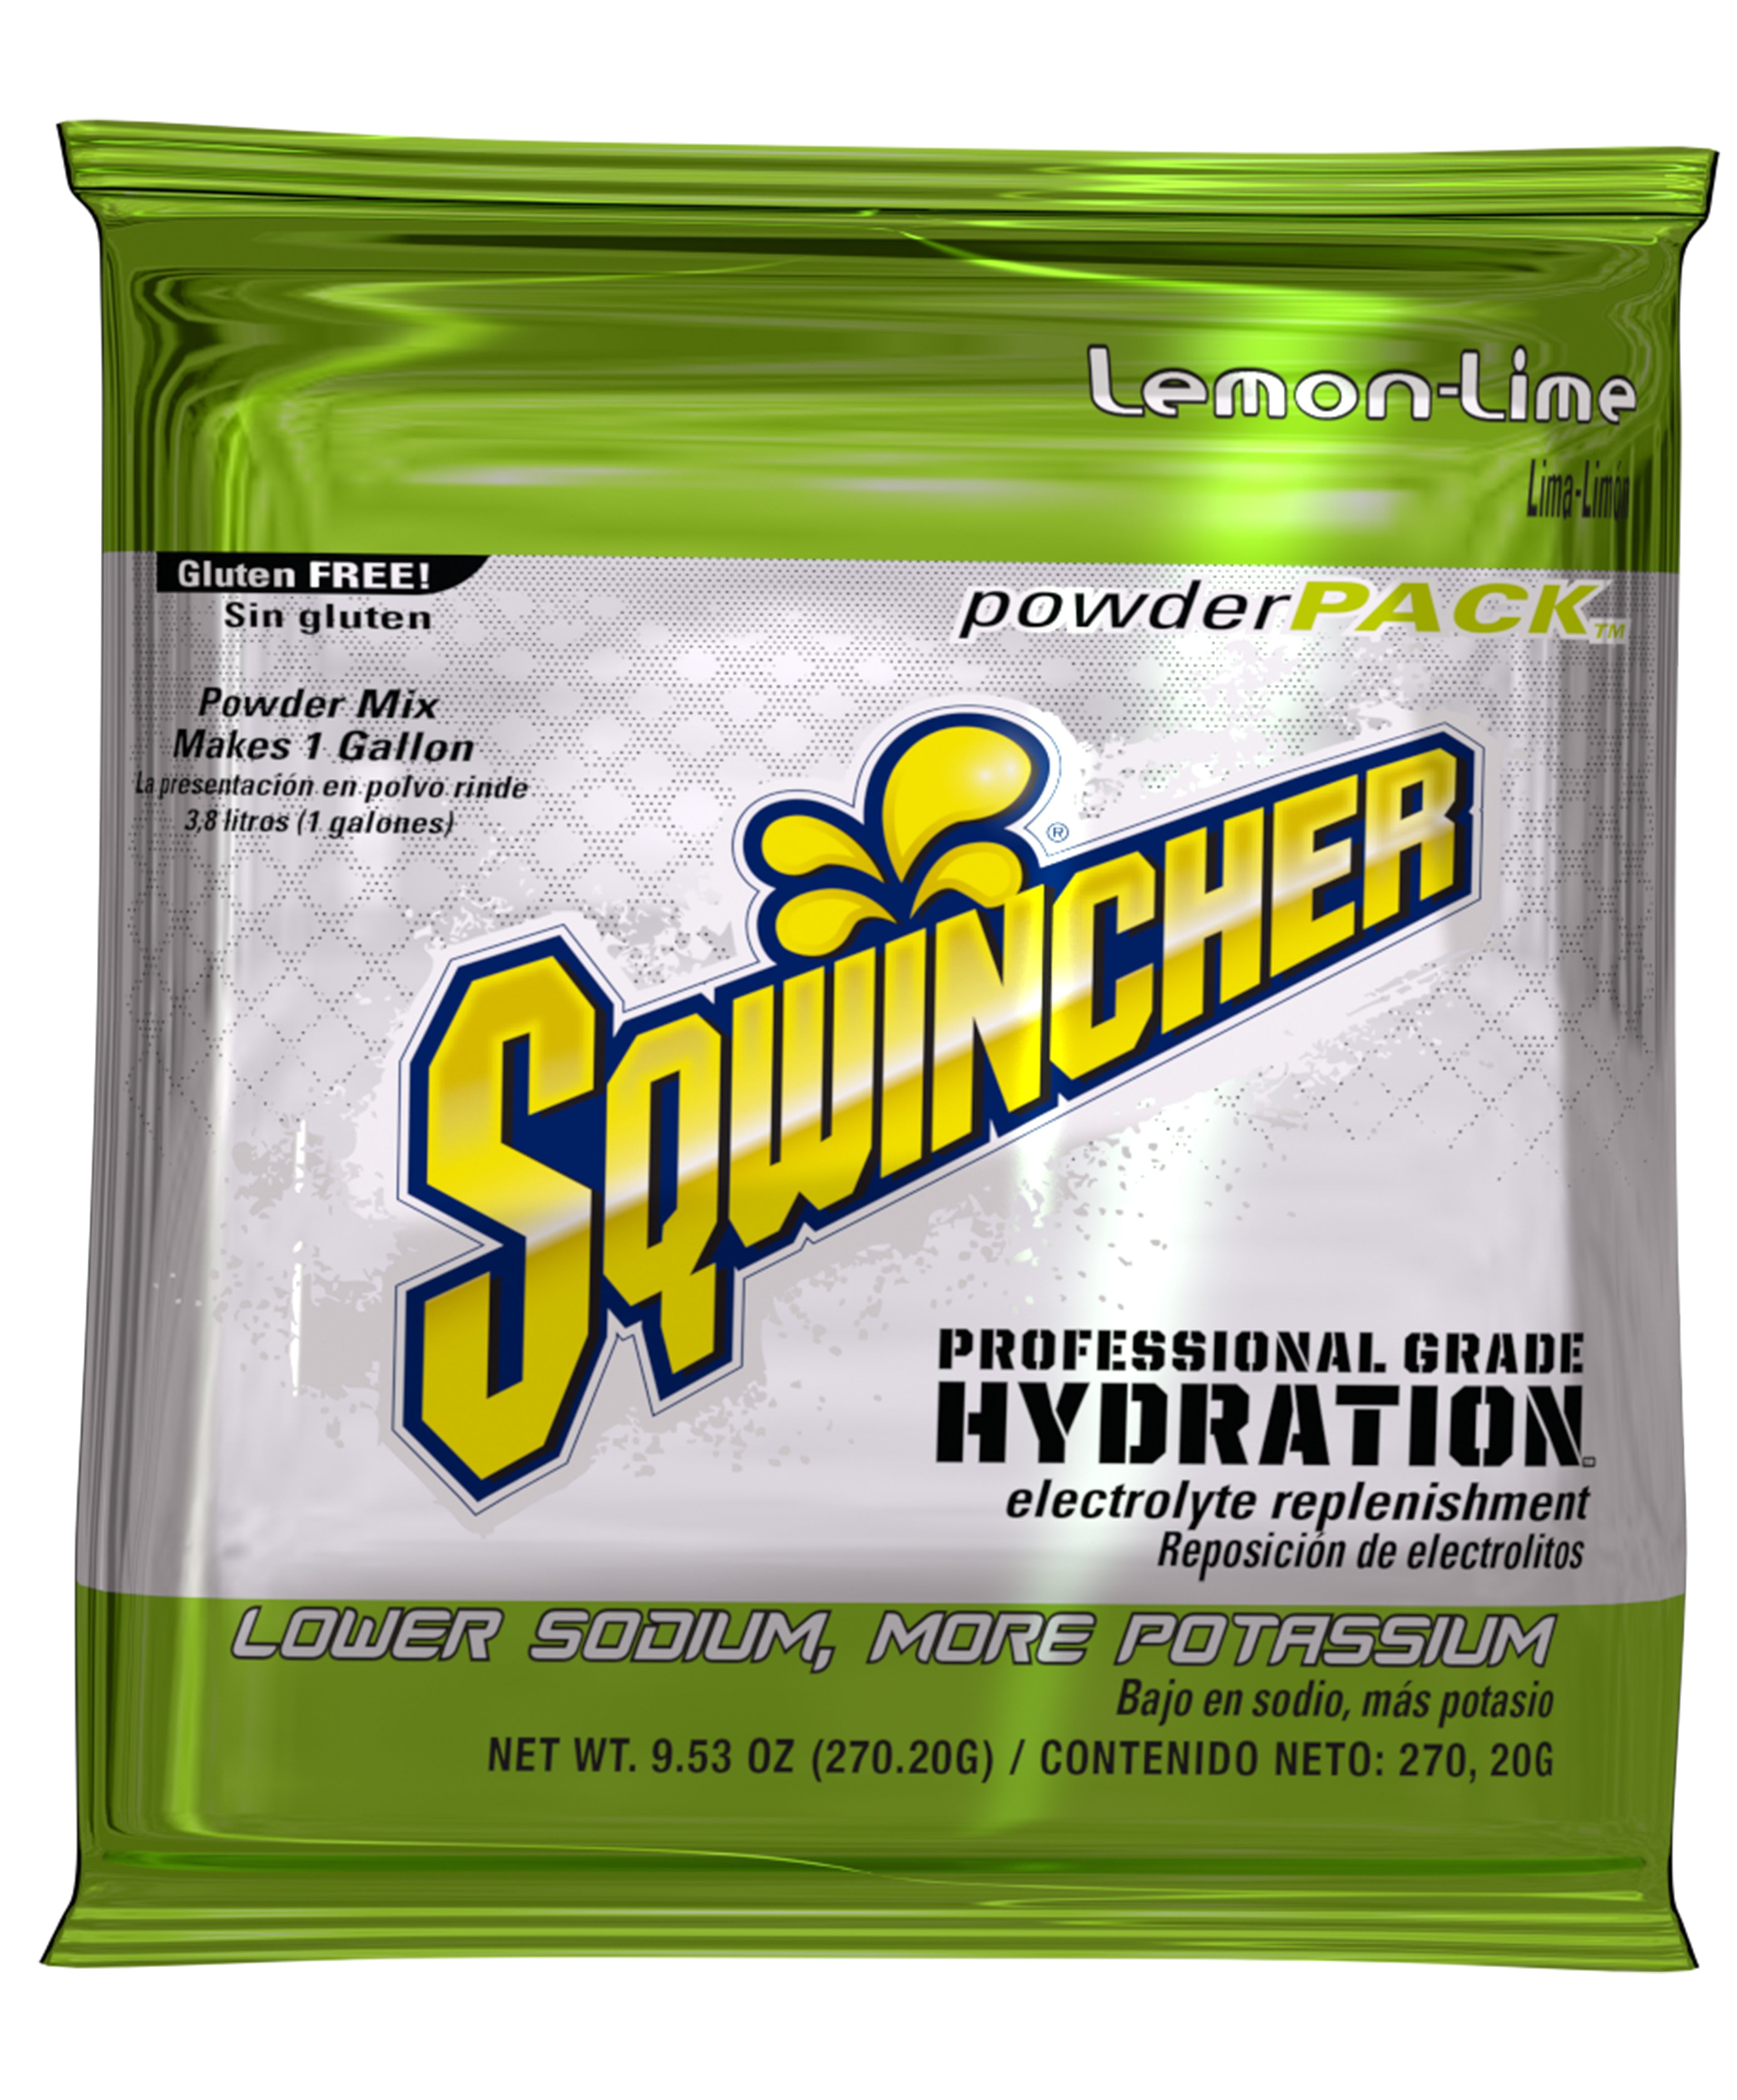 Sqwincher 1 Gallon Electrolyte Powder Pack Drink Mix - MC600 - Medsitis